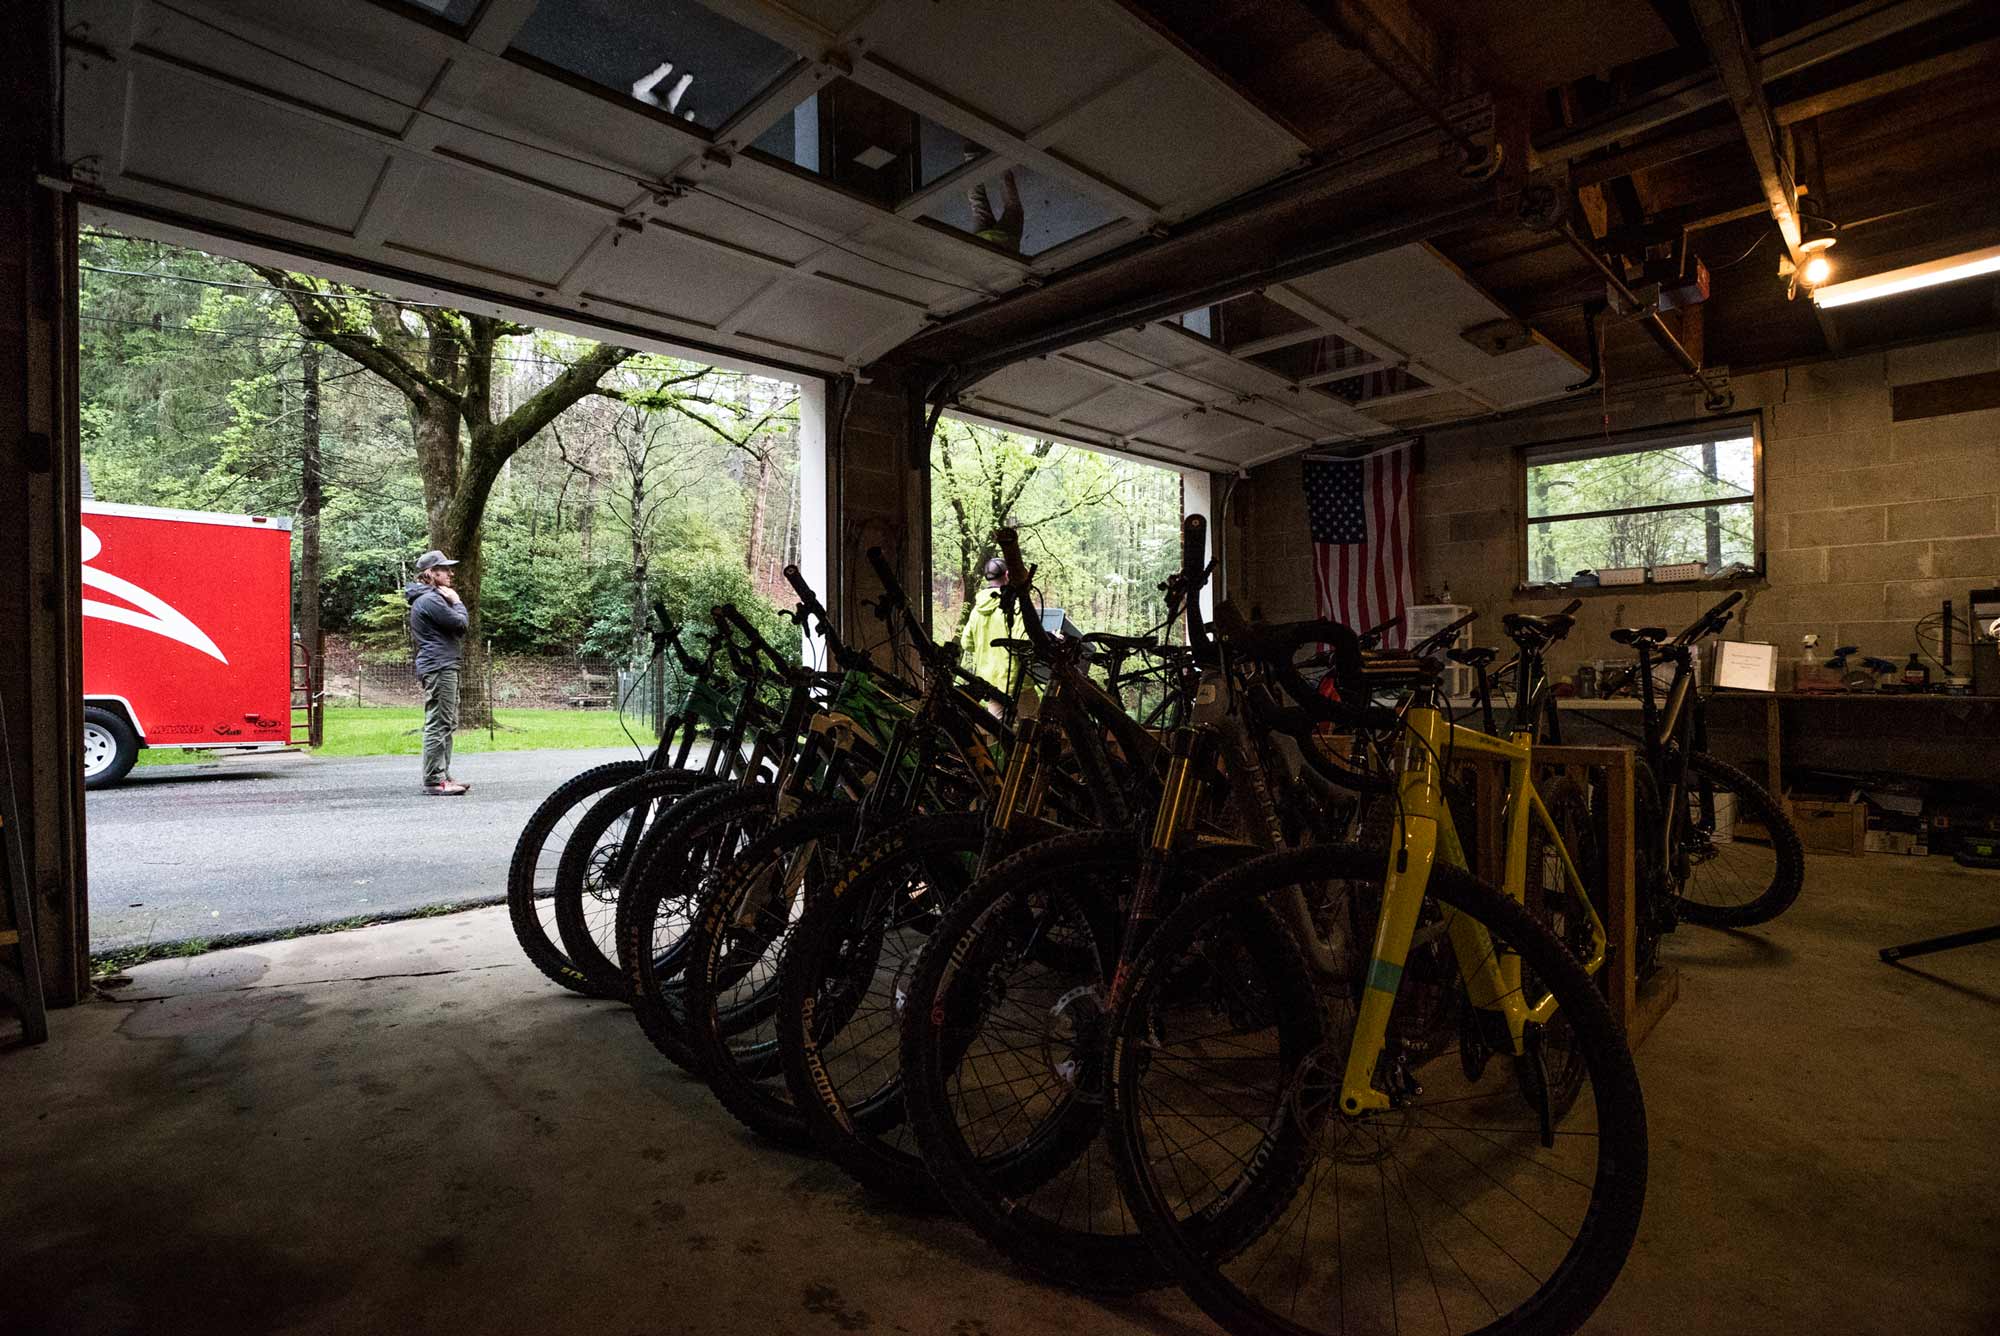 Mountain bikes inside the Bike Farm garage in NC